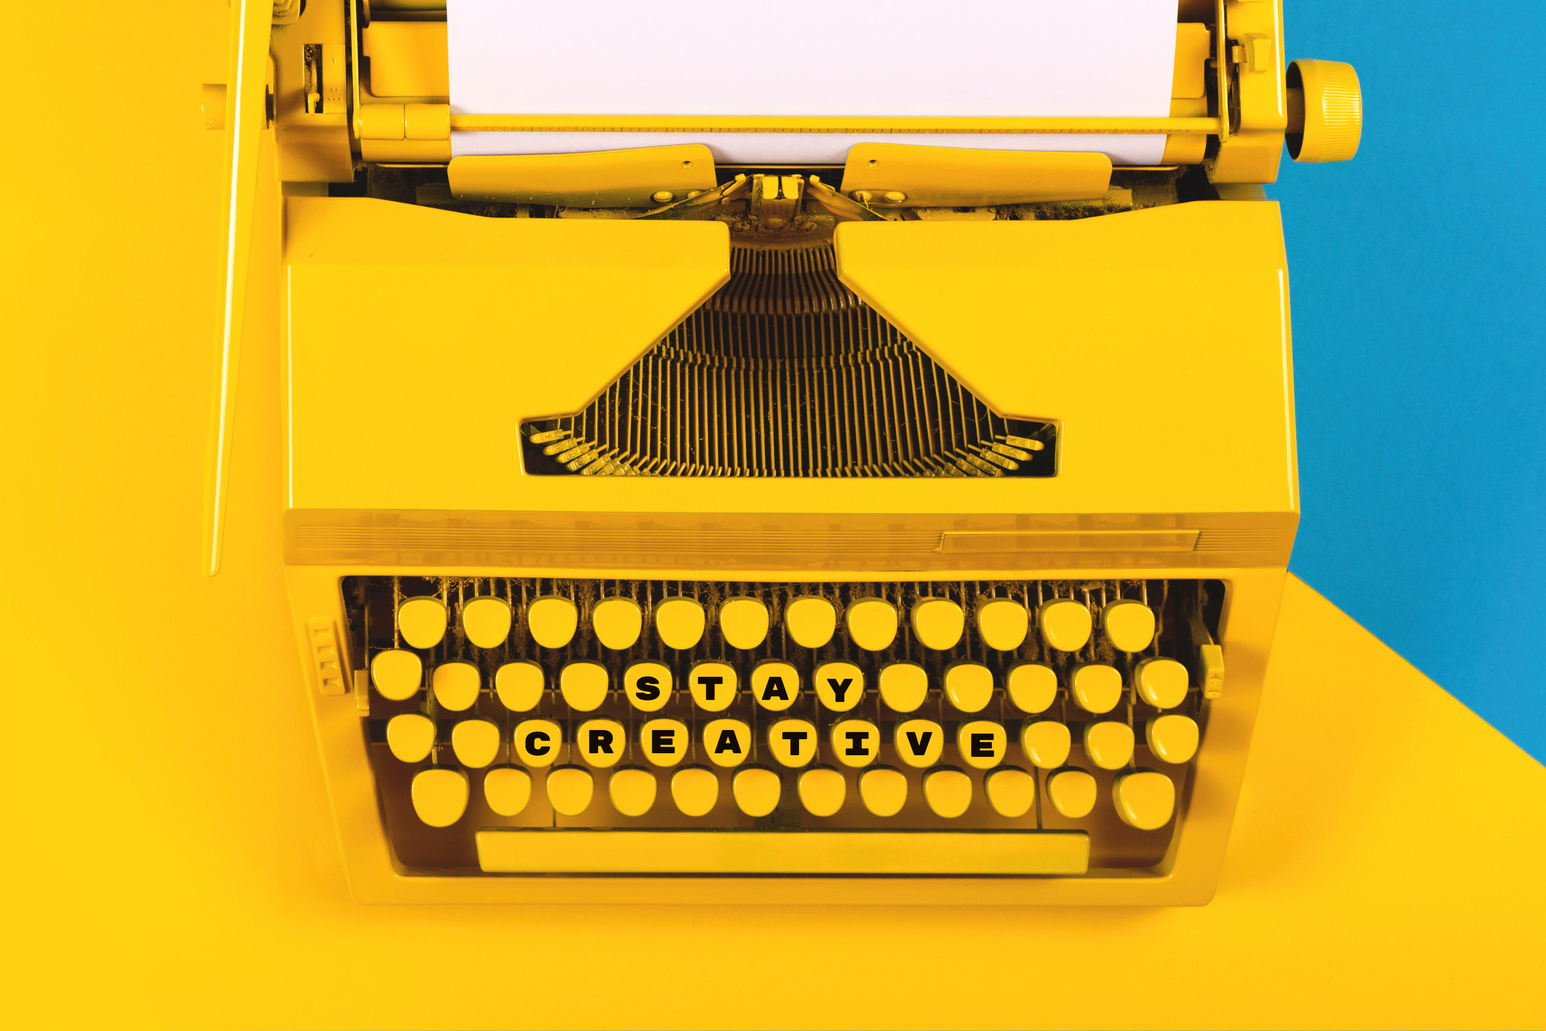 Stay Creative Written on a Typewriter